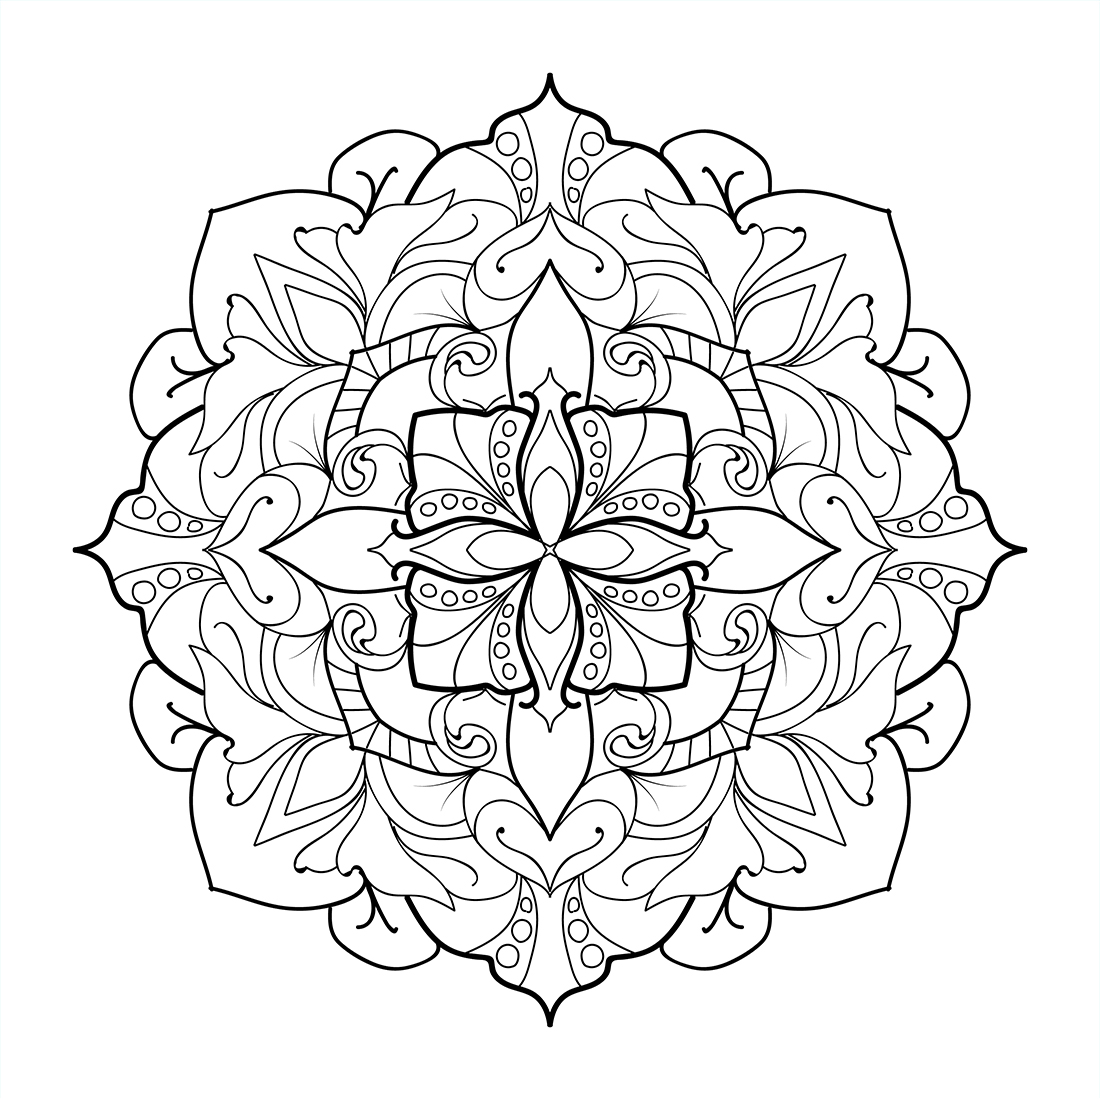 Mandala art & pencil sketching